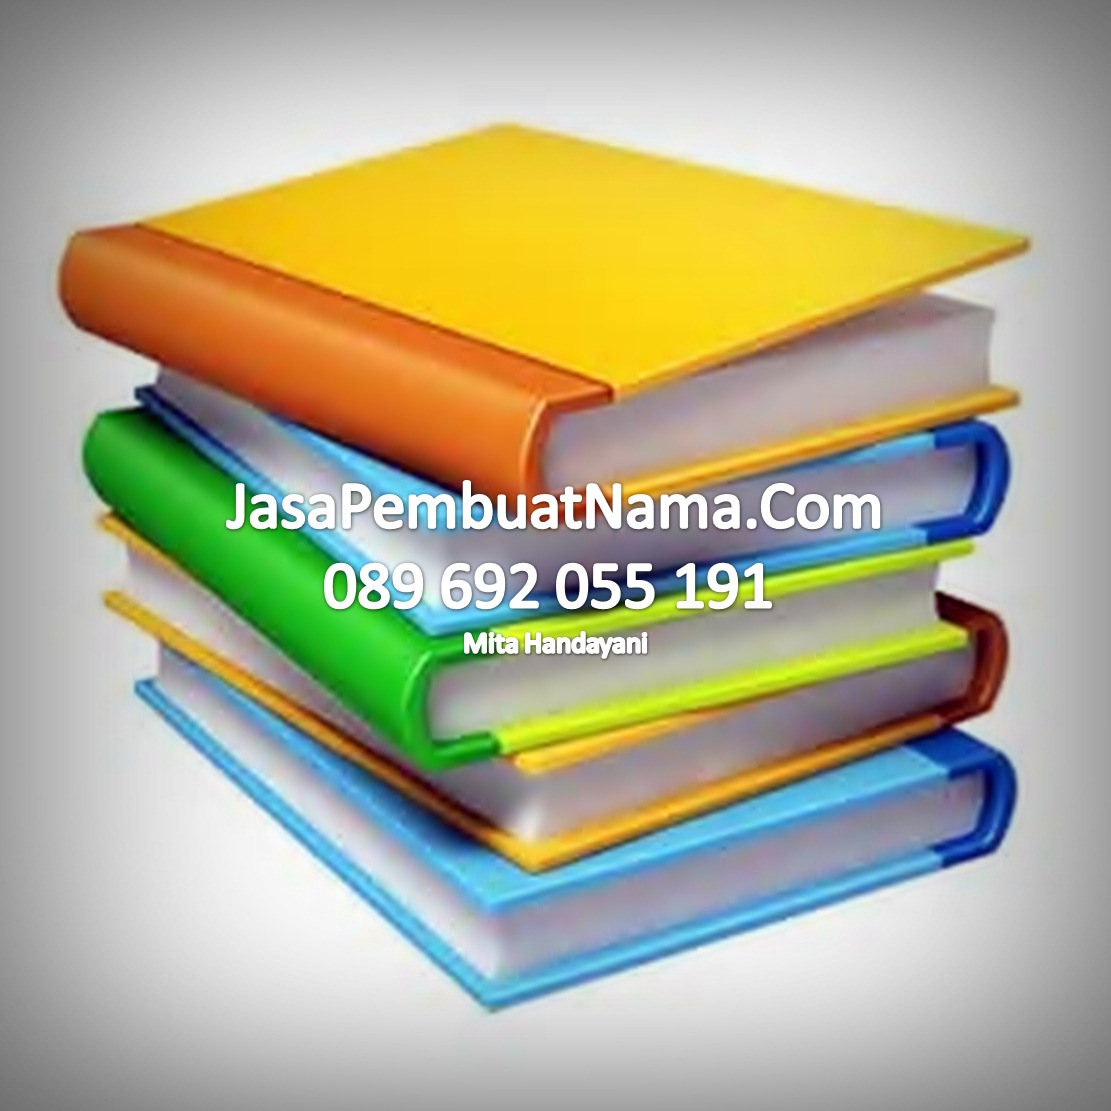 kumpulan buku jalaluddin rumi pdf